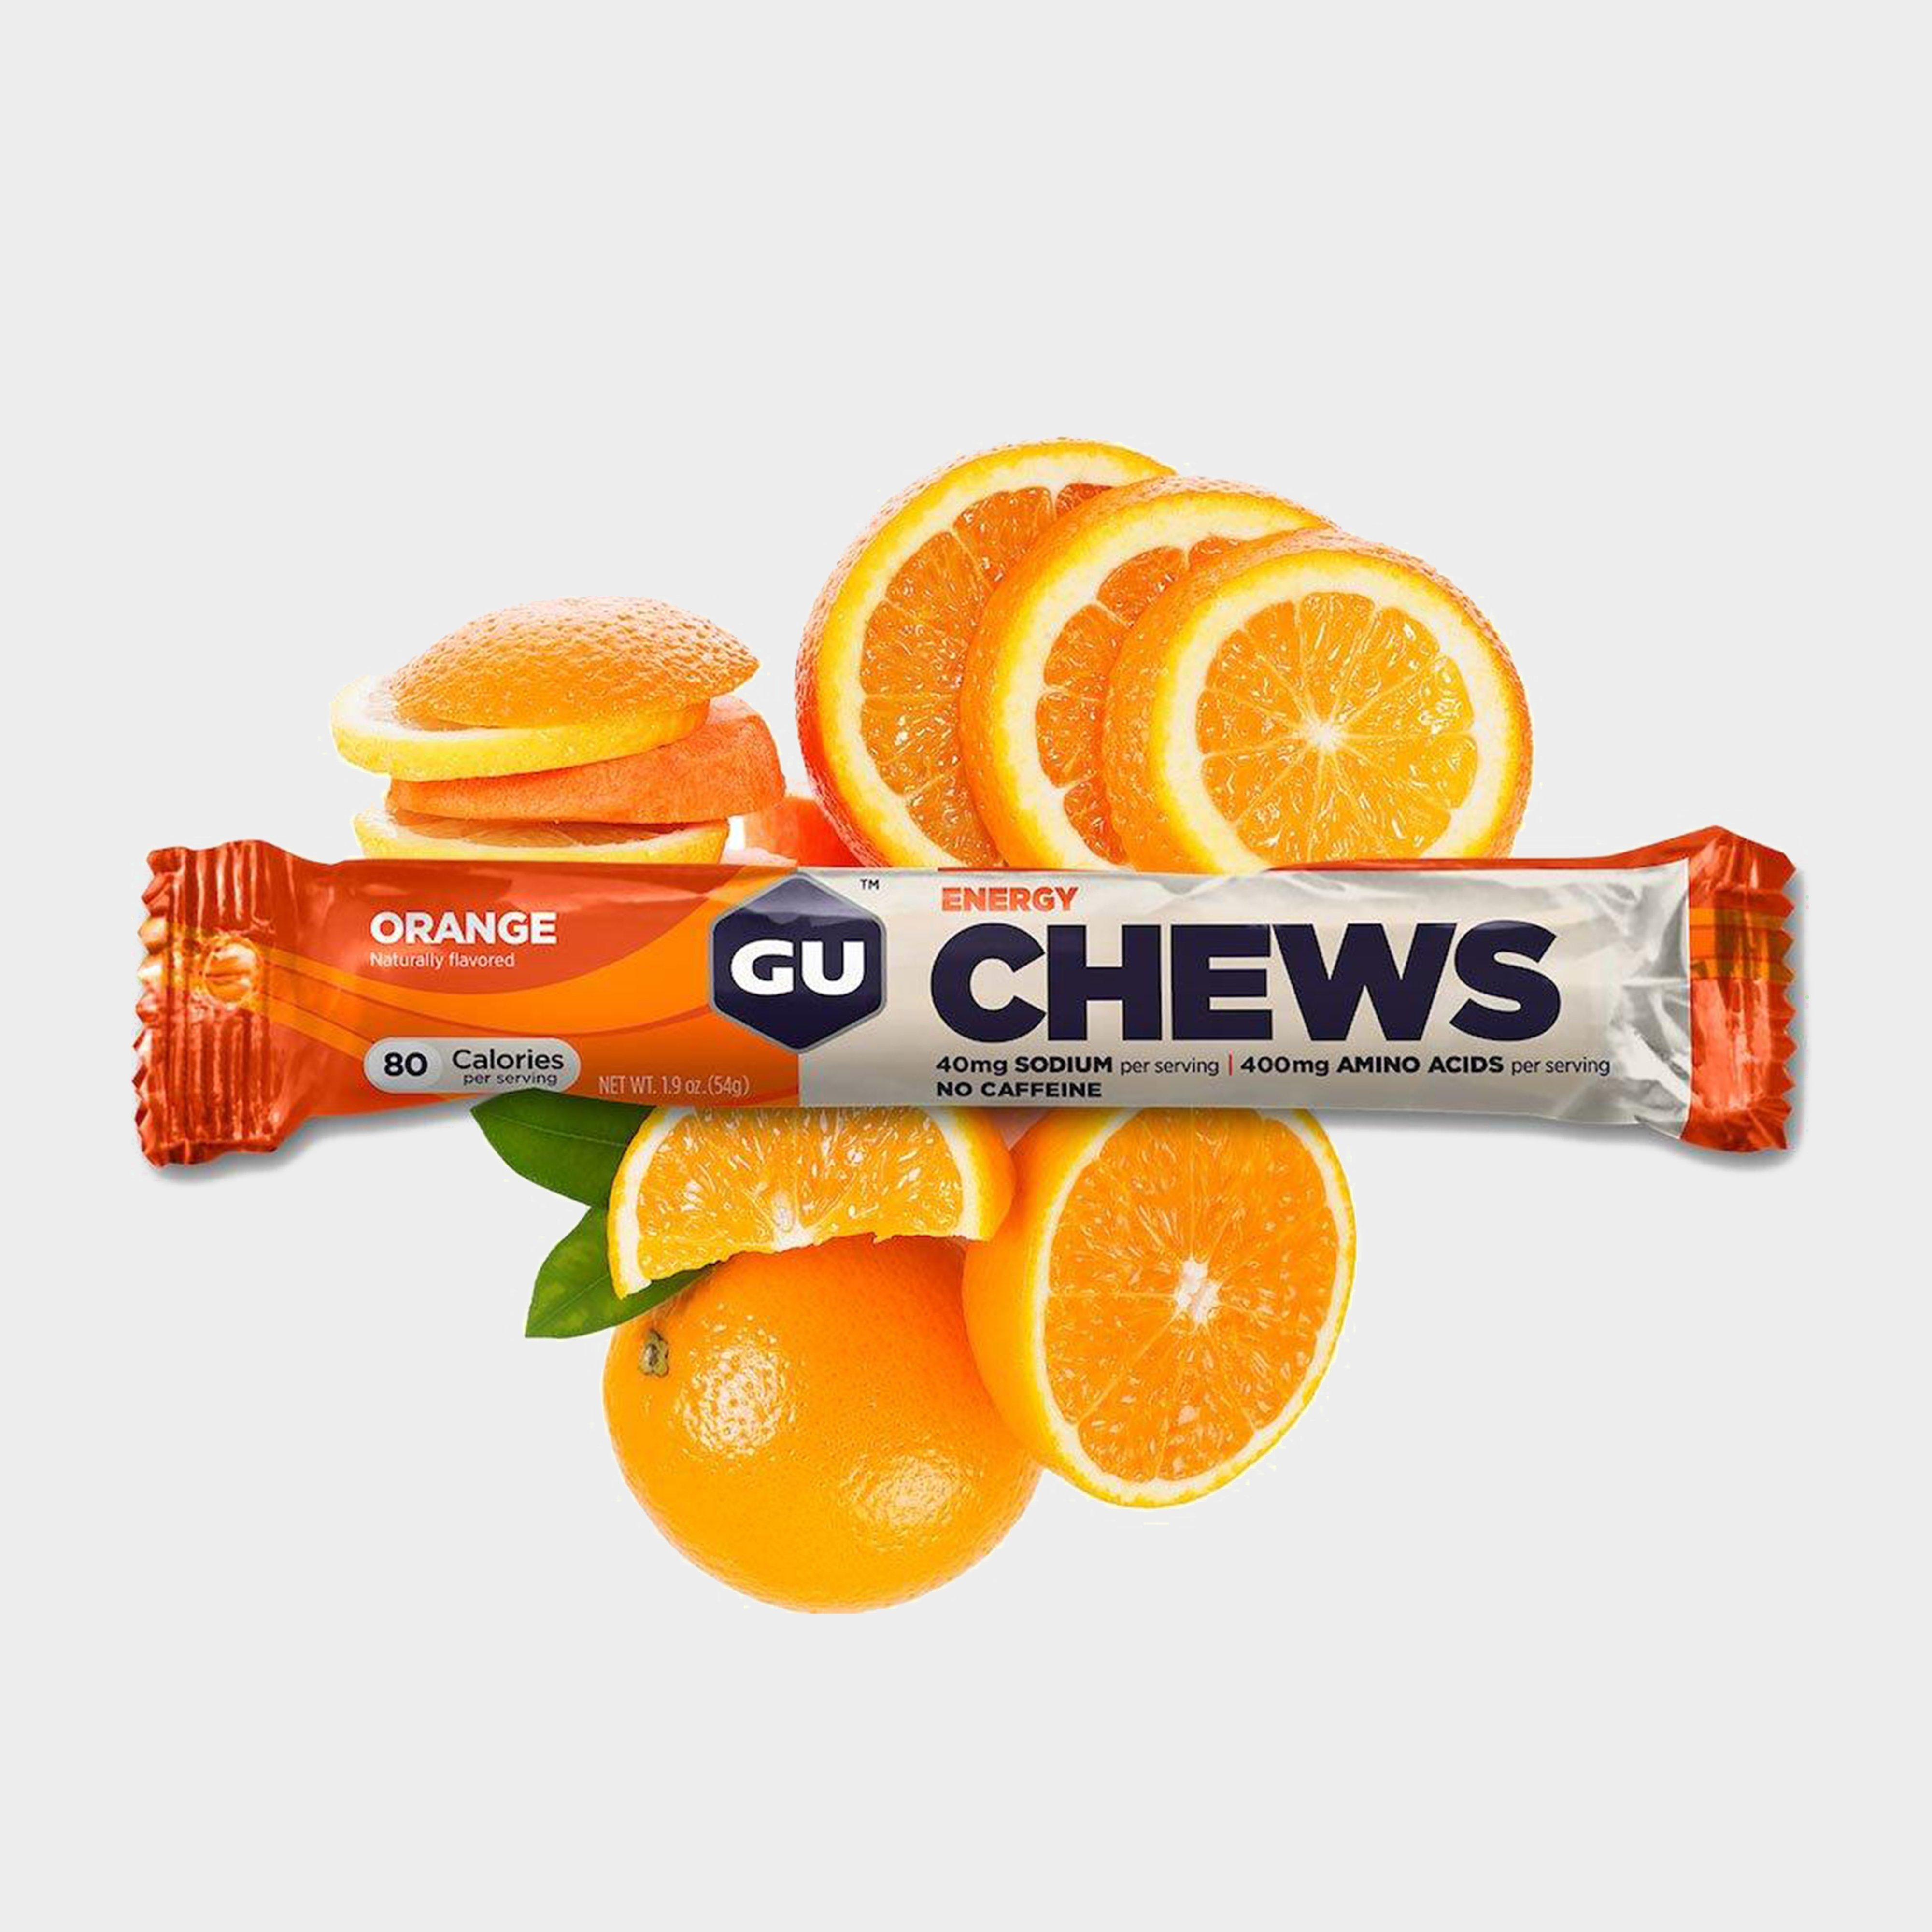 GU Energy Chews - Orange Review